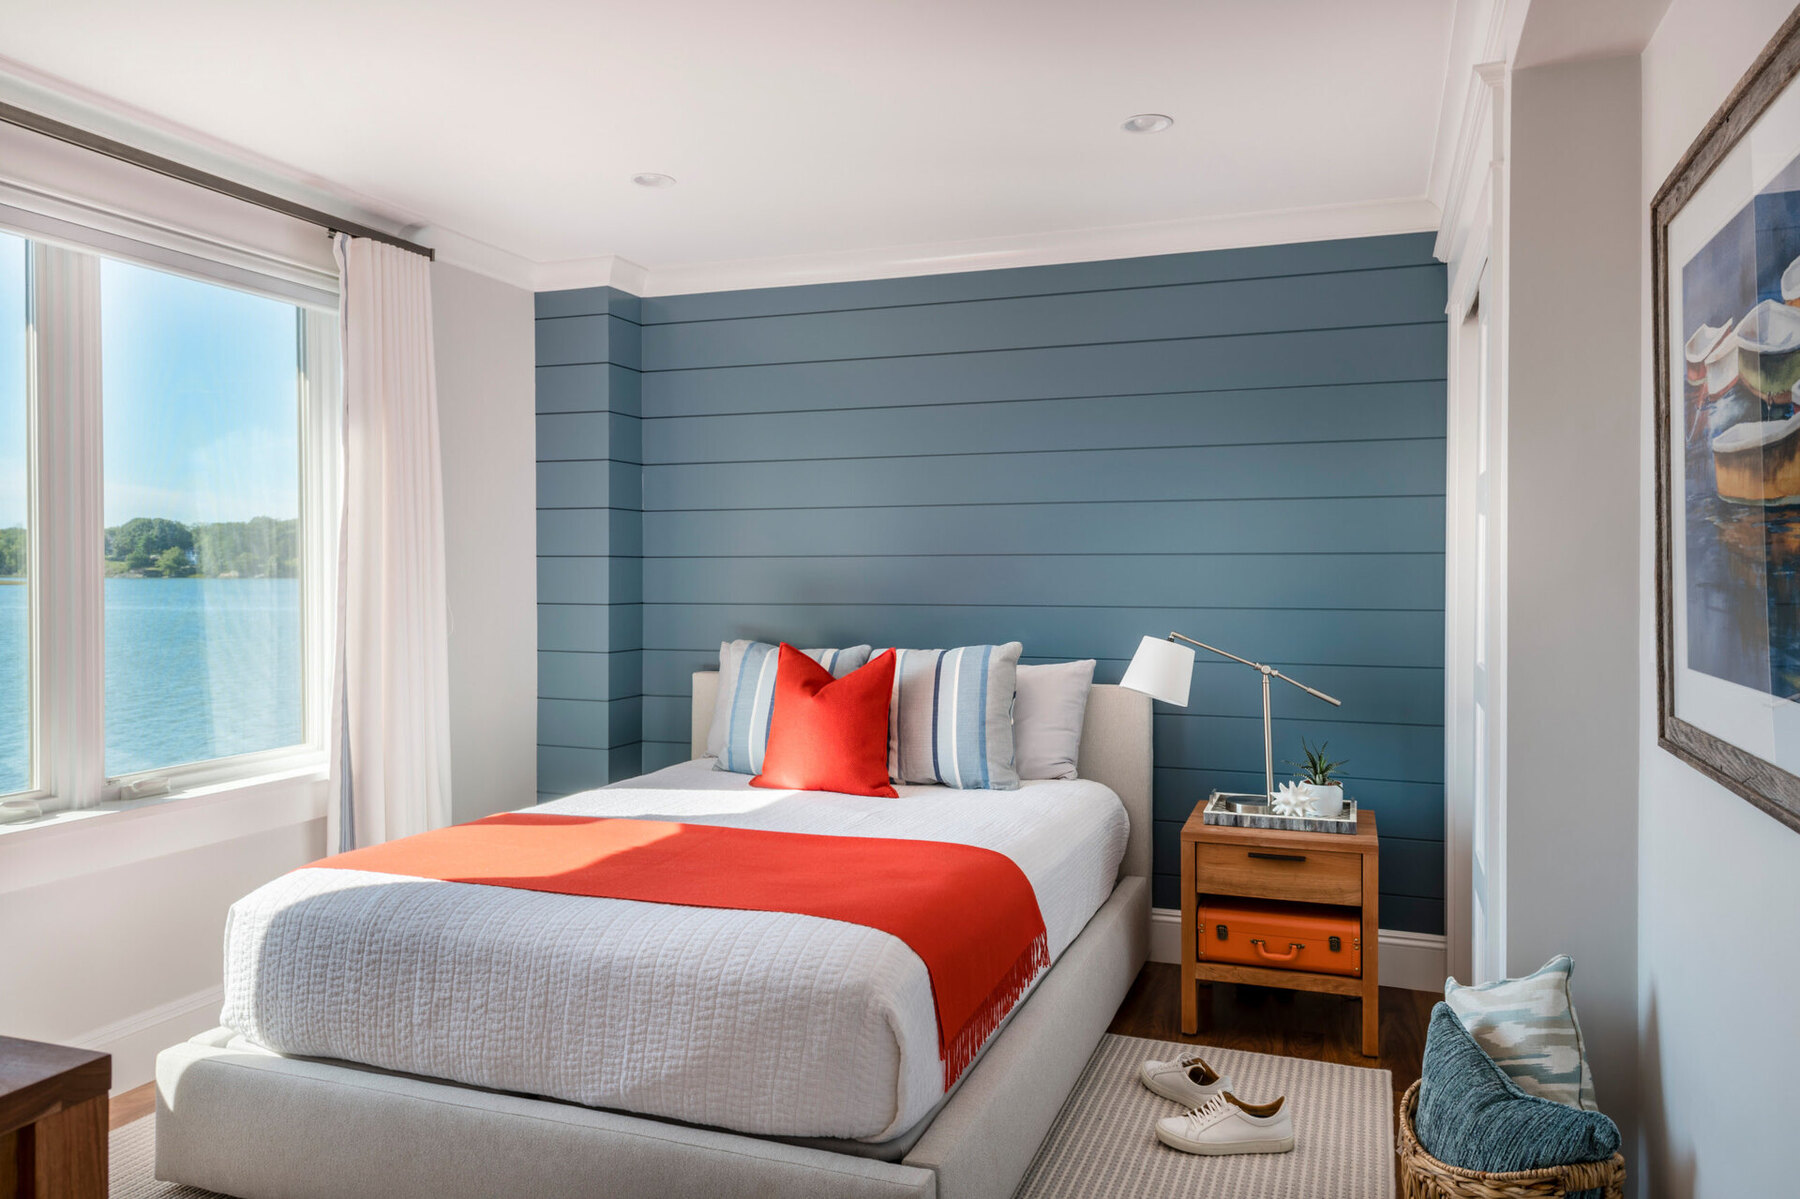 Shiplap Bedroom Wall Ideas: 10 Stylish Ways With Wall Paneling